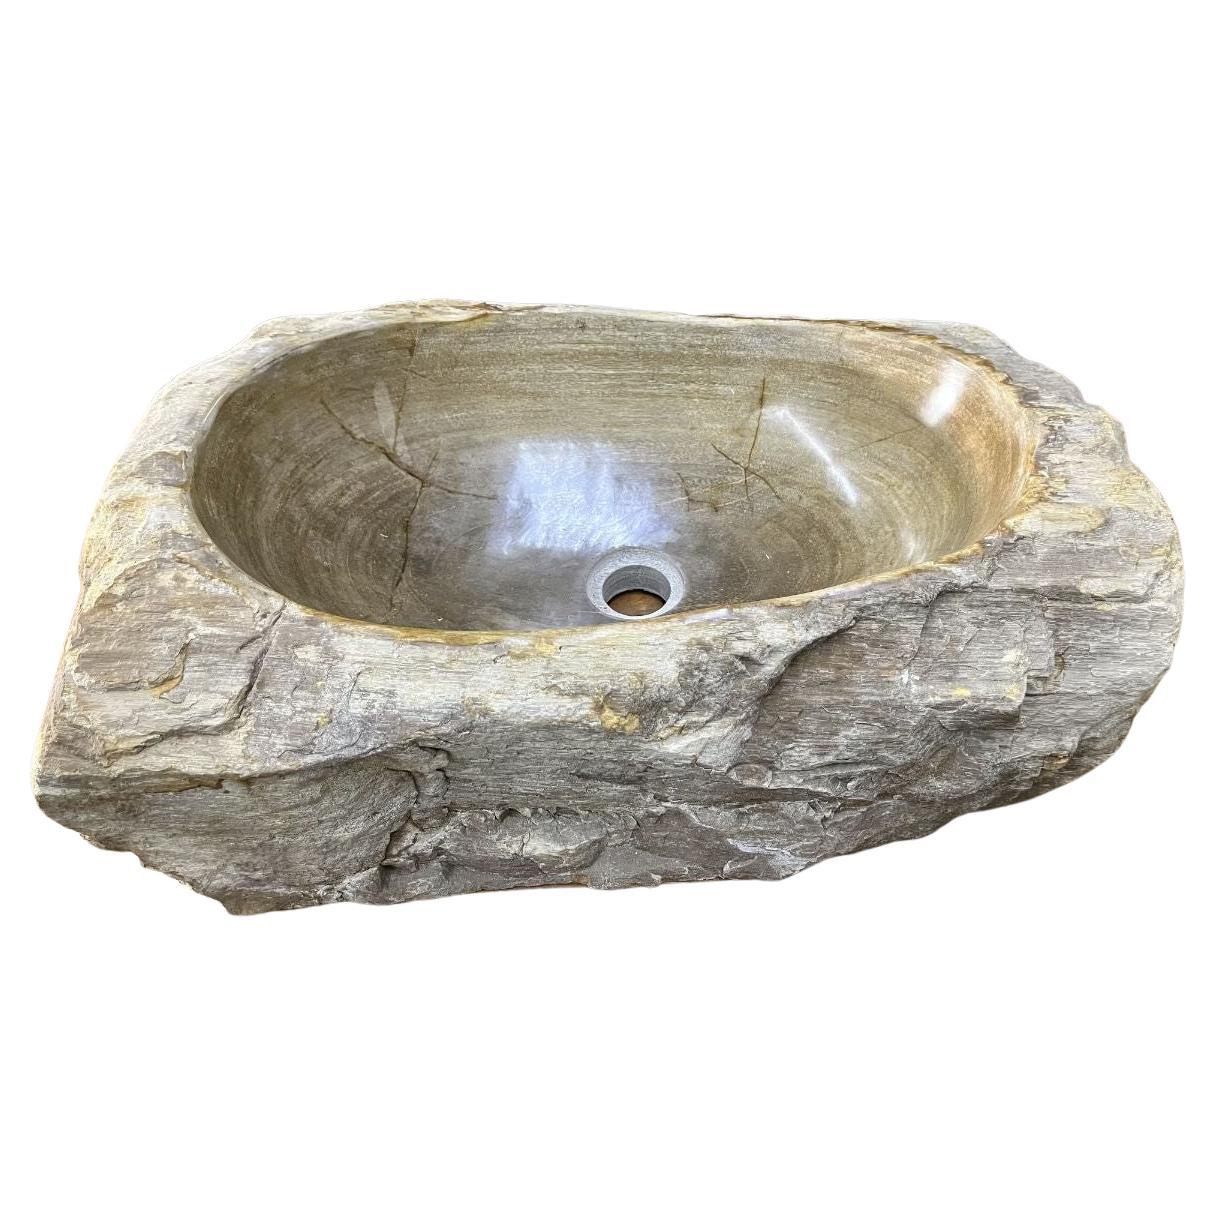 New And Custom Stone Sinks